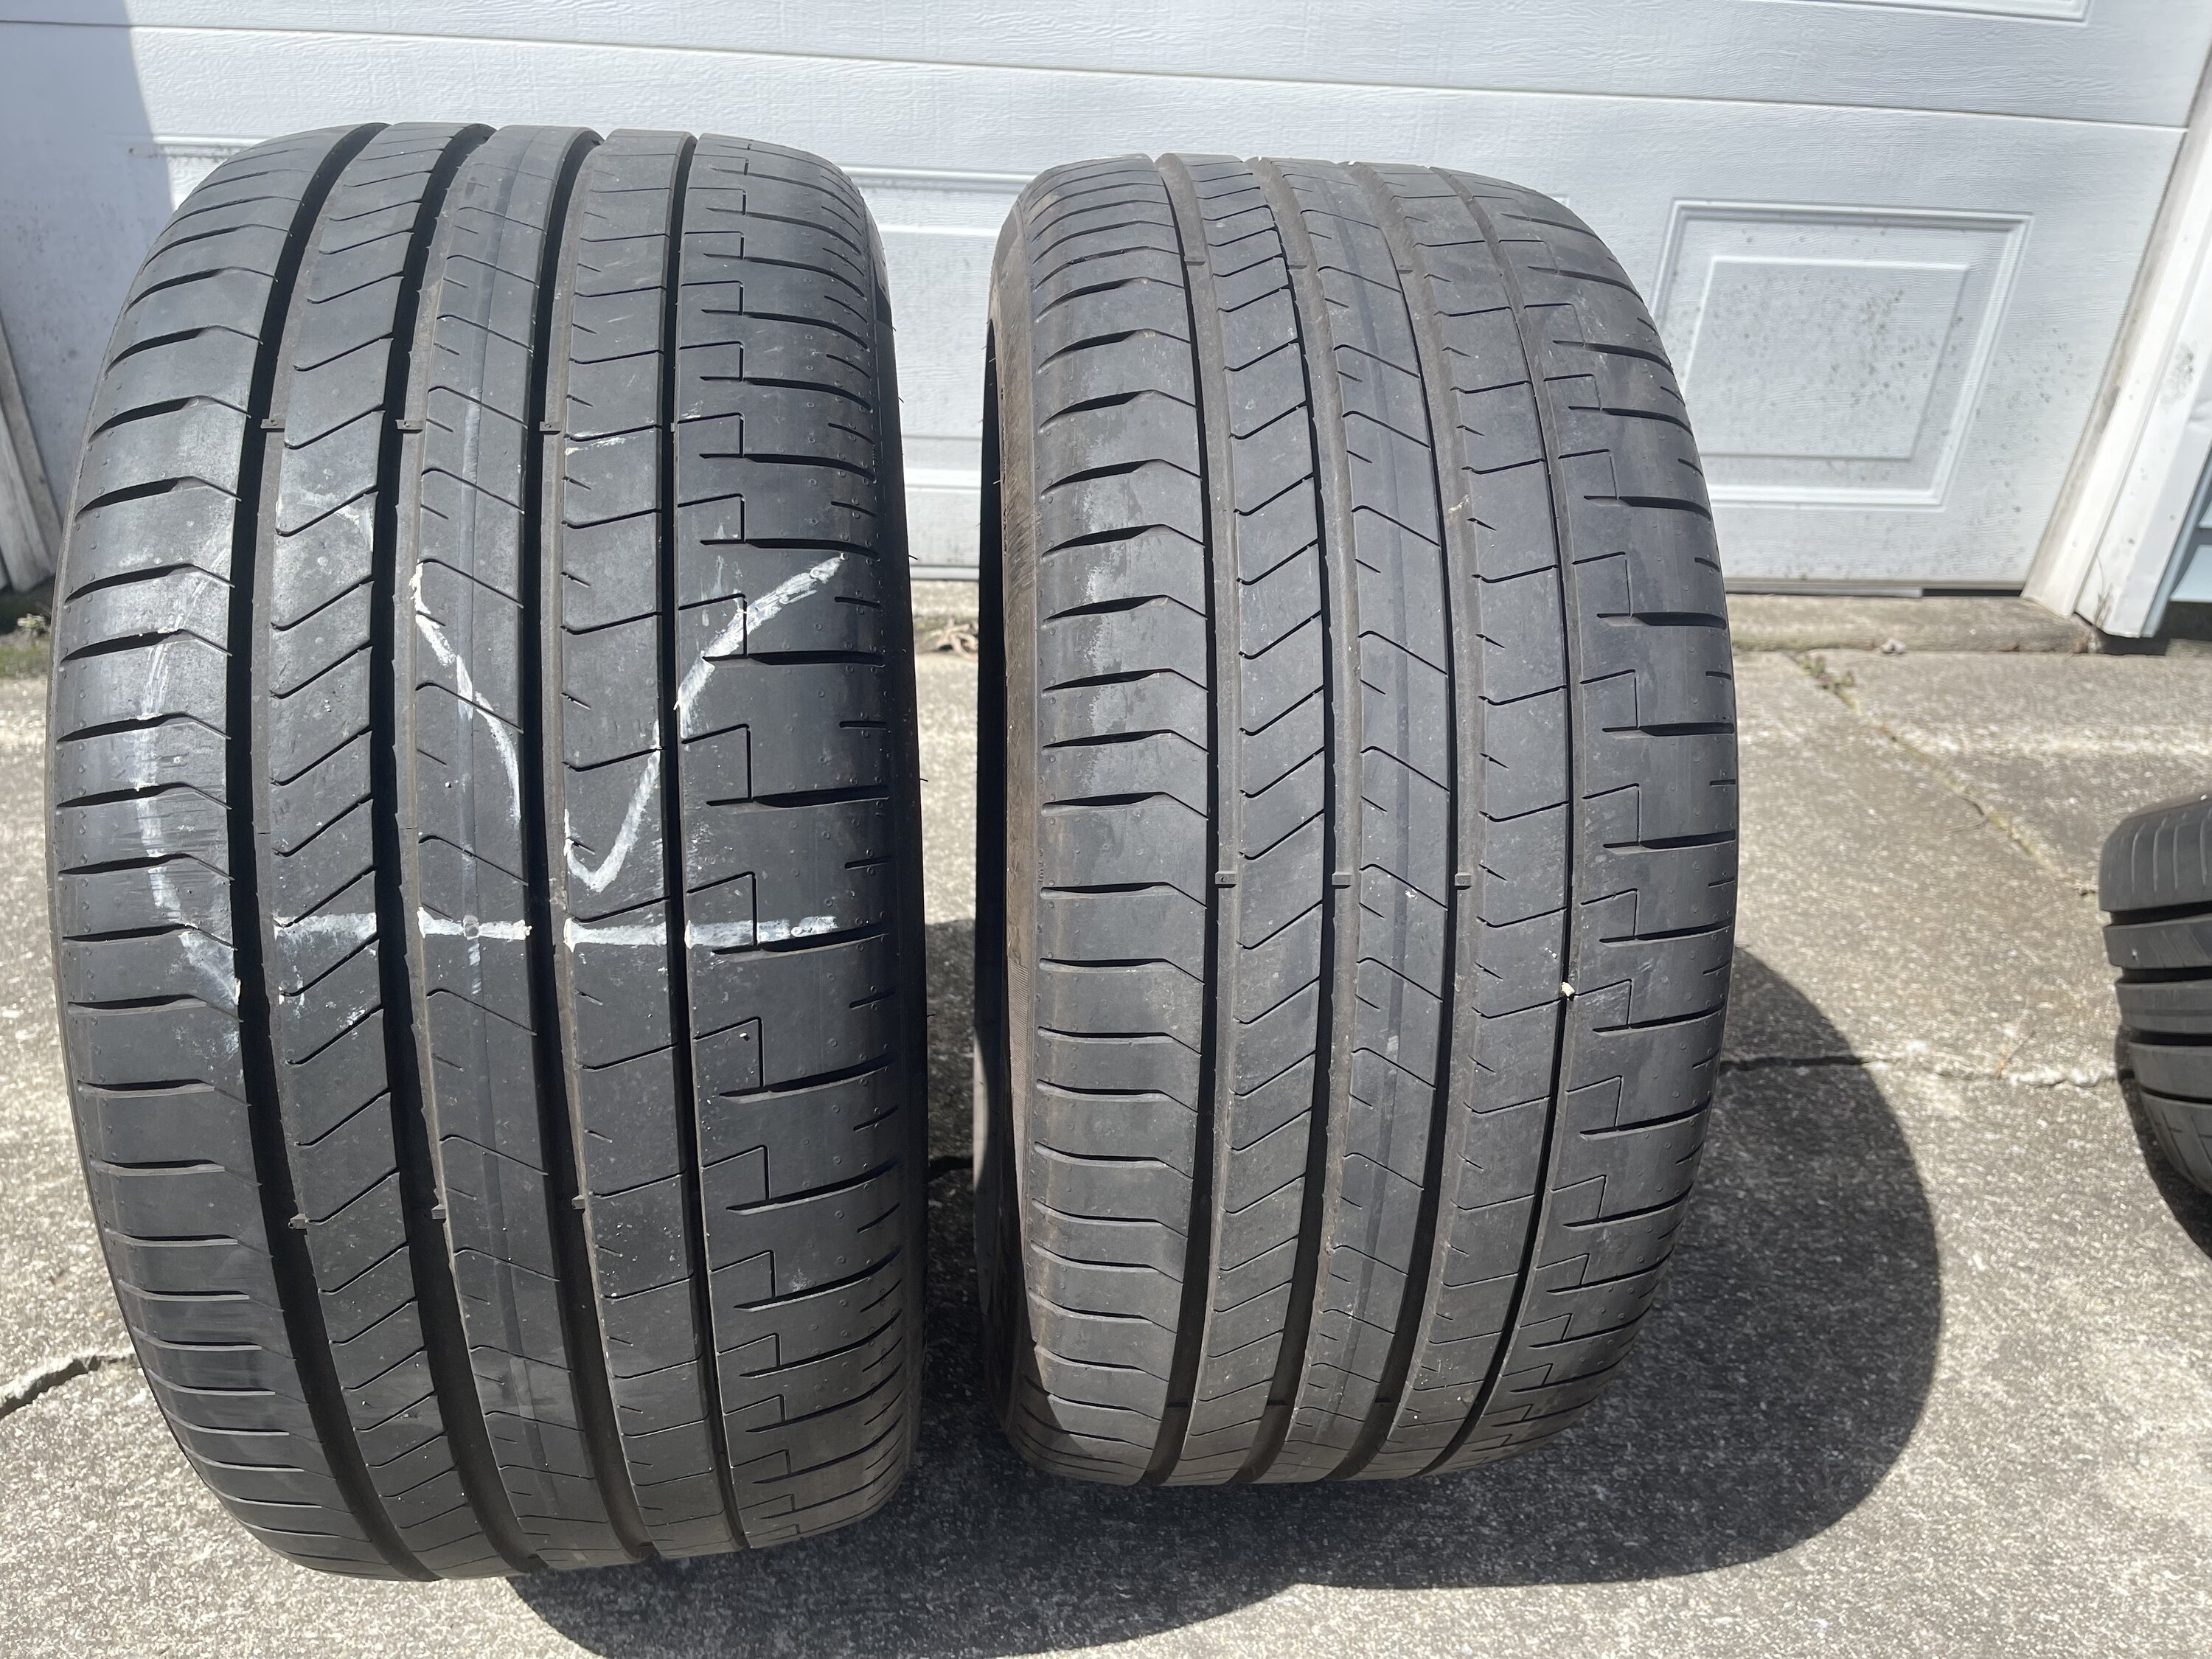 S650 Mustang Pirelli P Zero PP tires 373 miles $600 OBO Chicago area IMG_8774